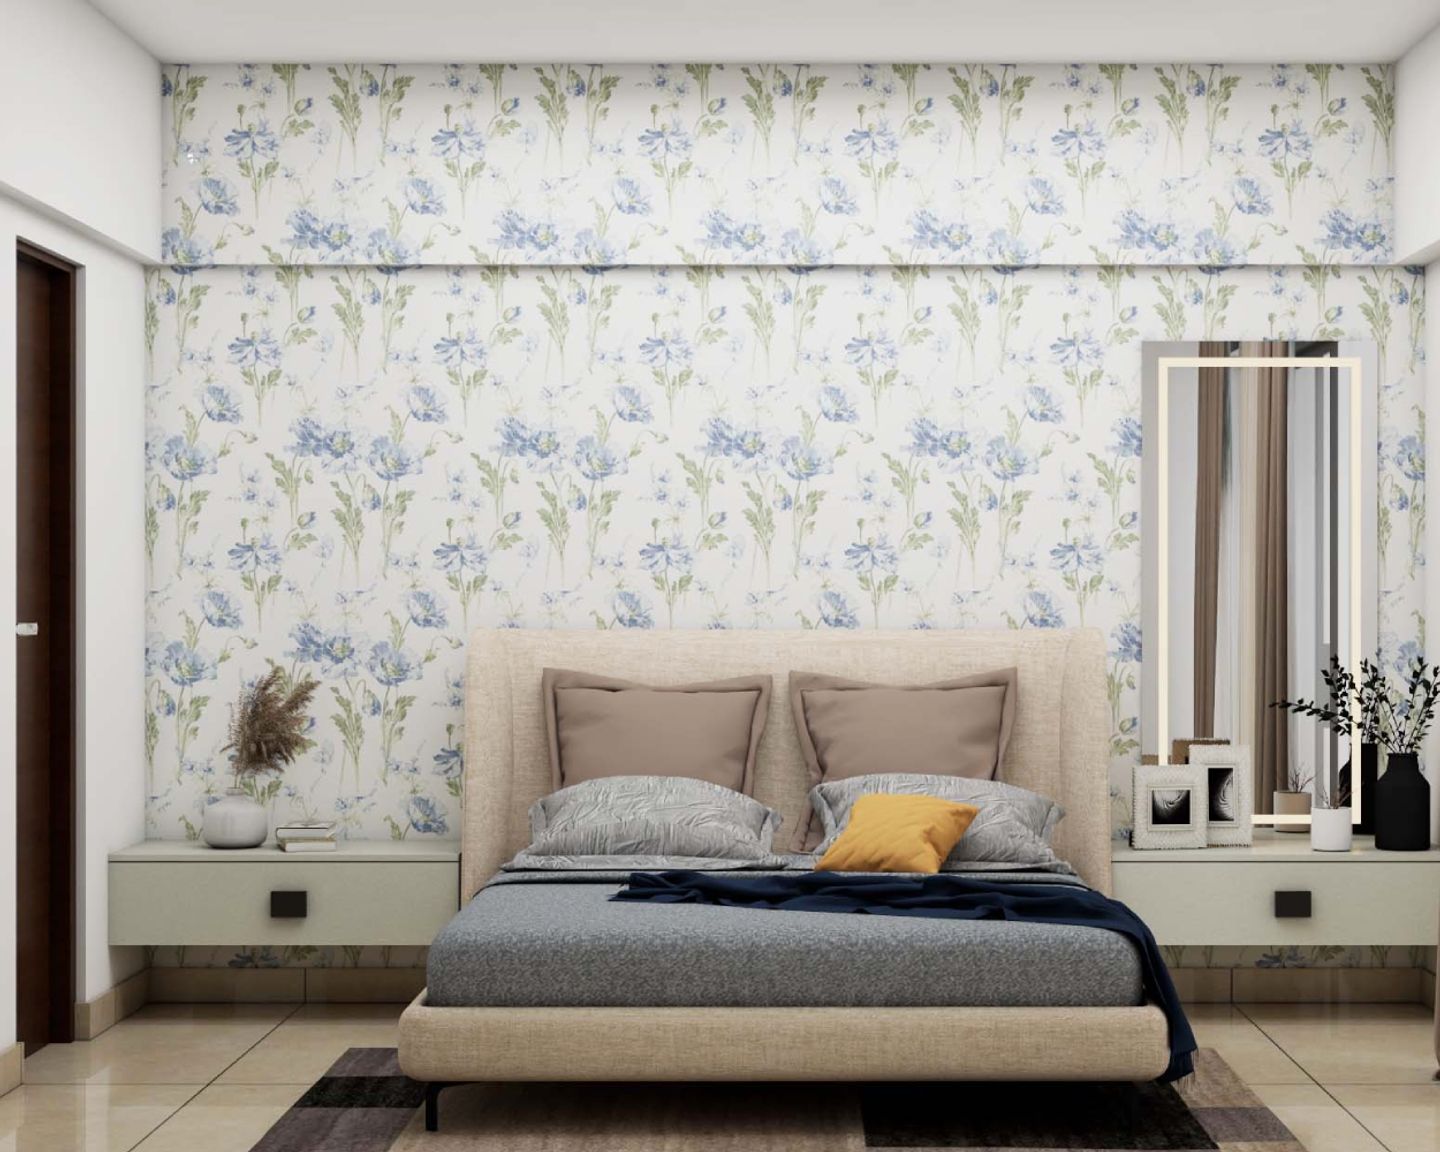 White And Blue Floral Bedroom Wallpaper Design - Livspace